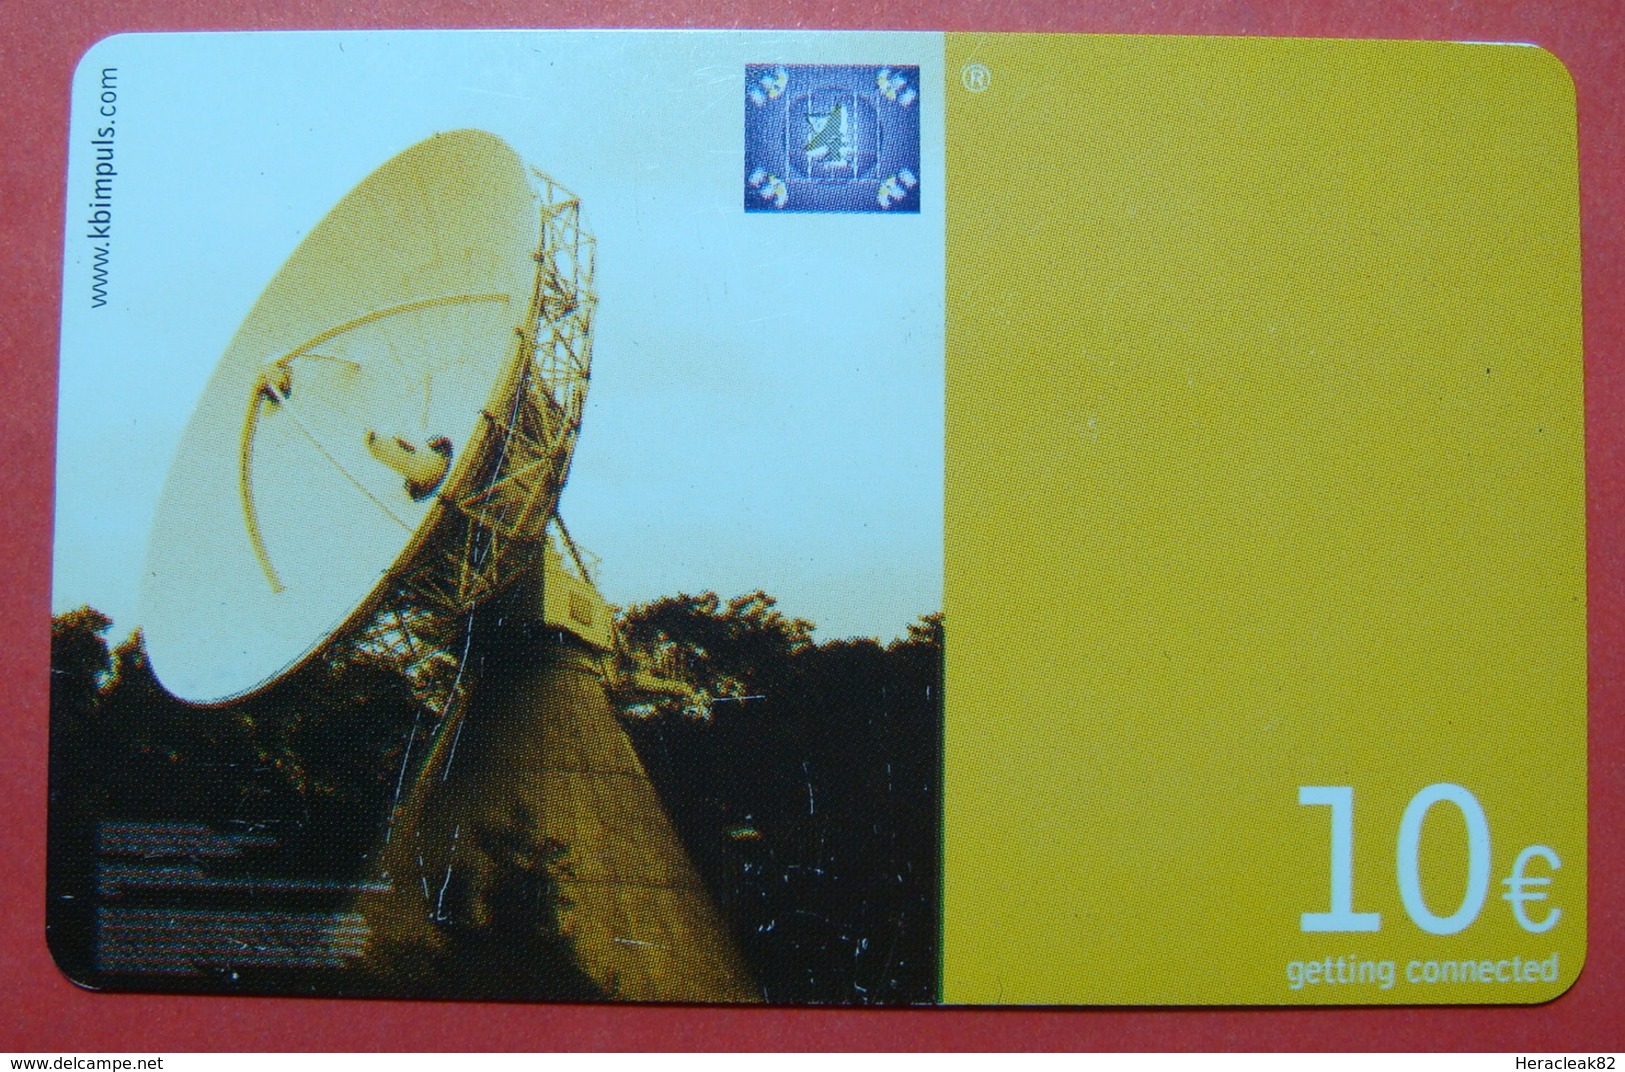 Serie B-59-08..., German Army In Kosovo Prepaid Phone CARD 10 Euro Used Operator KBIMPULS *Satellite* - Kosovo